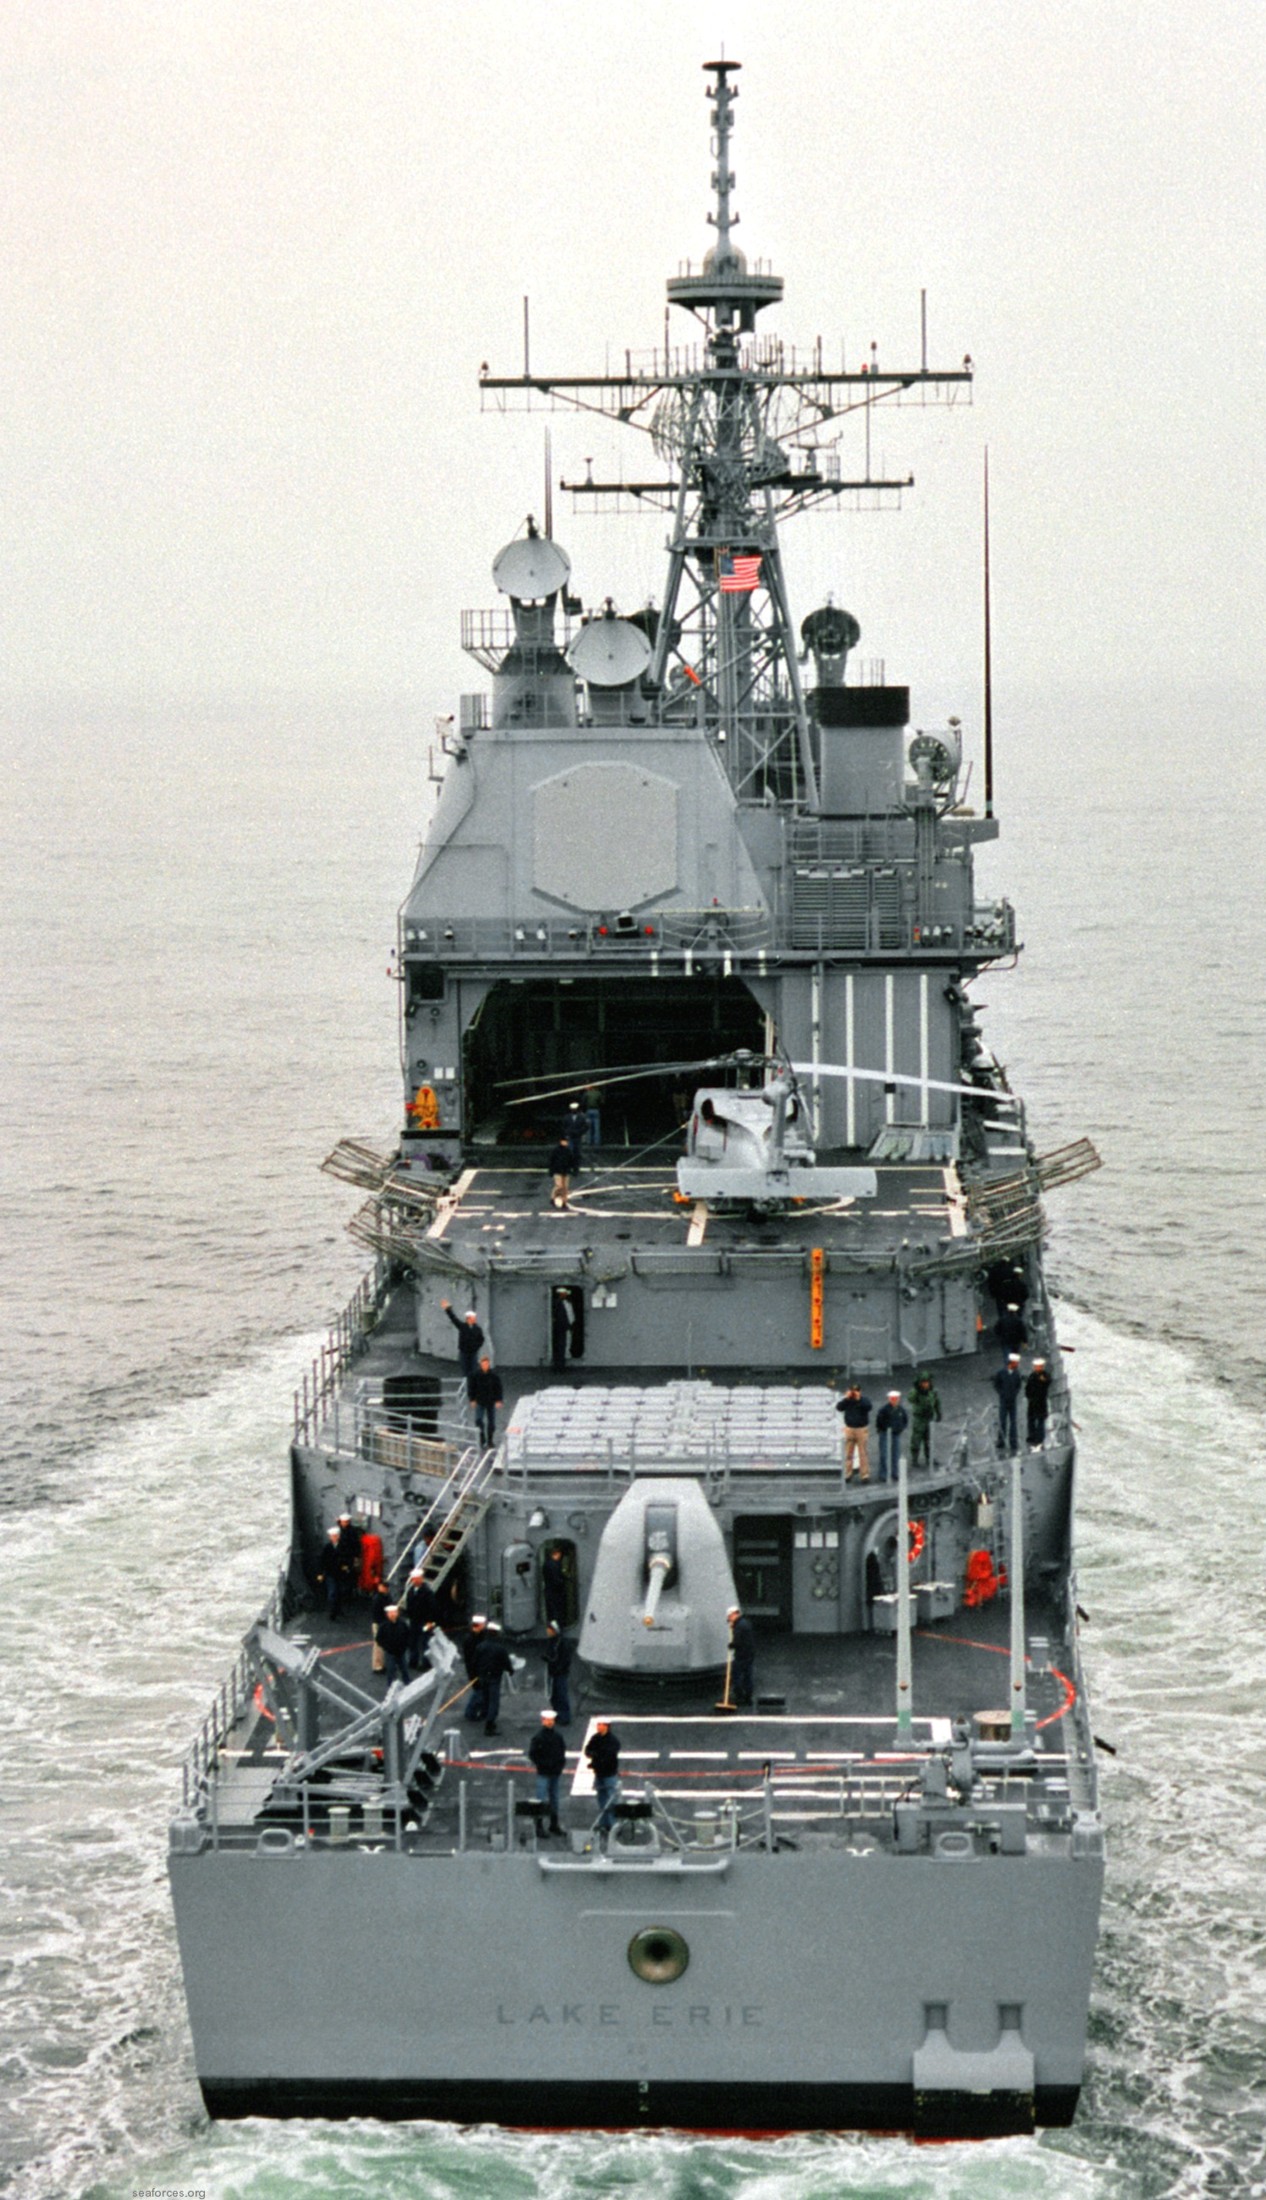 cg-70 uss lake erie ticonderoga class guided missile cruiser navy 75 aegis